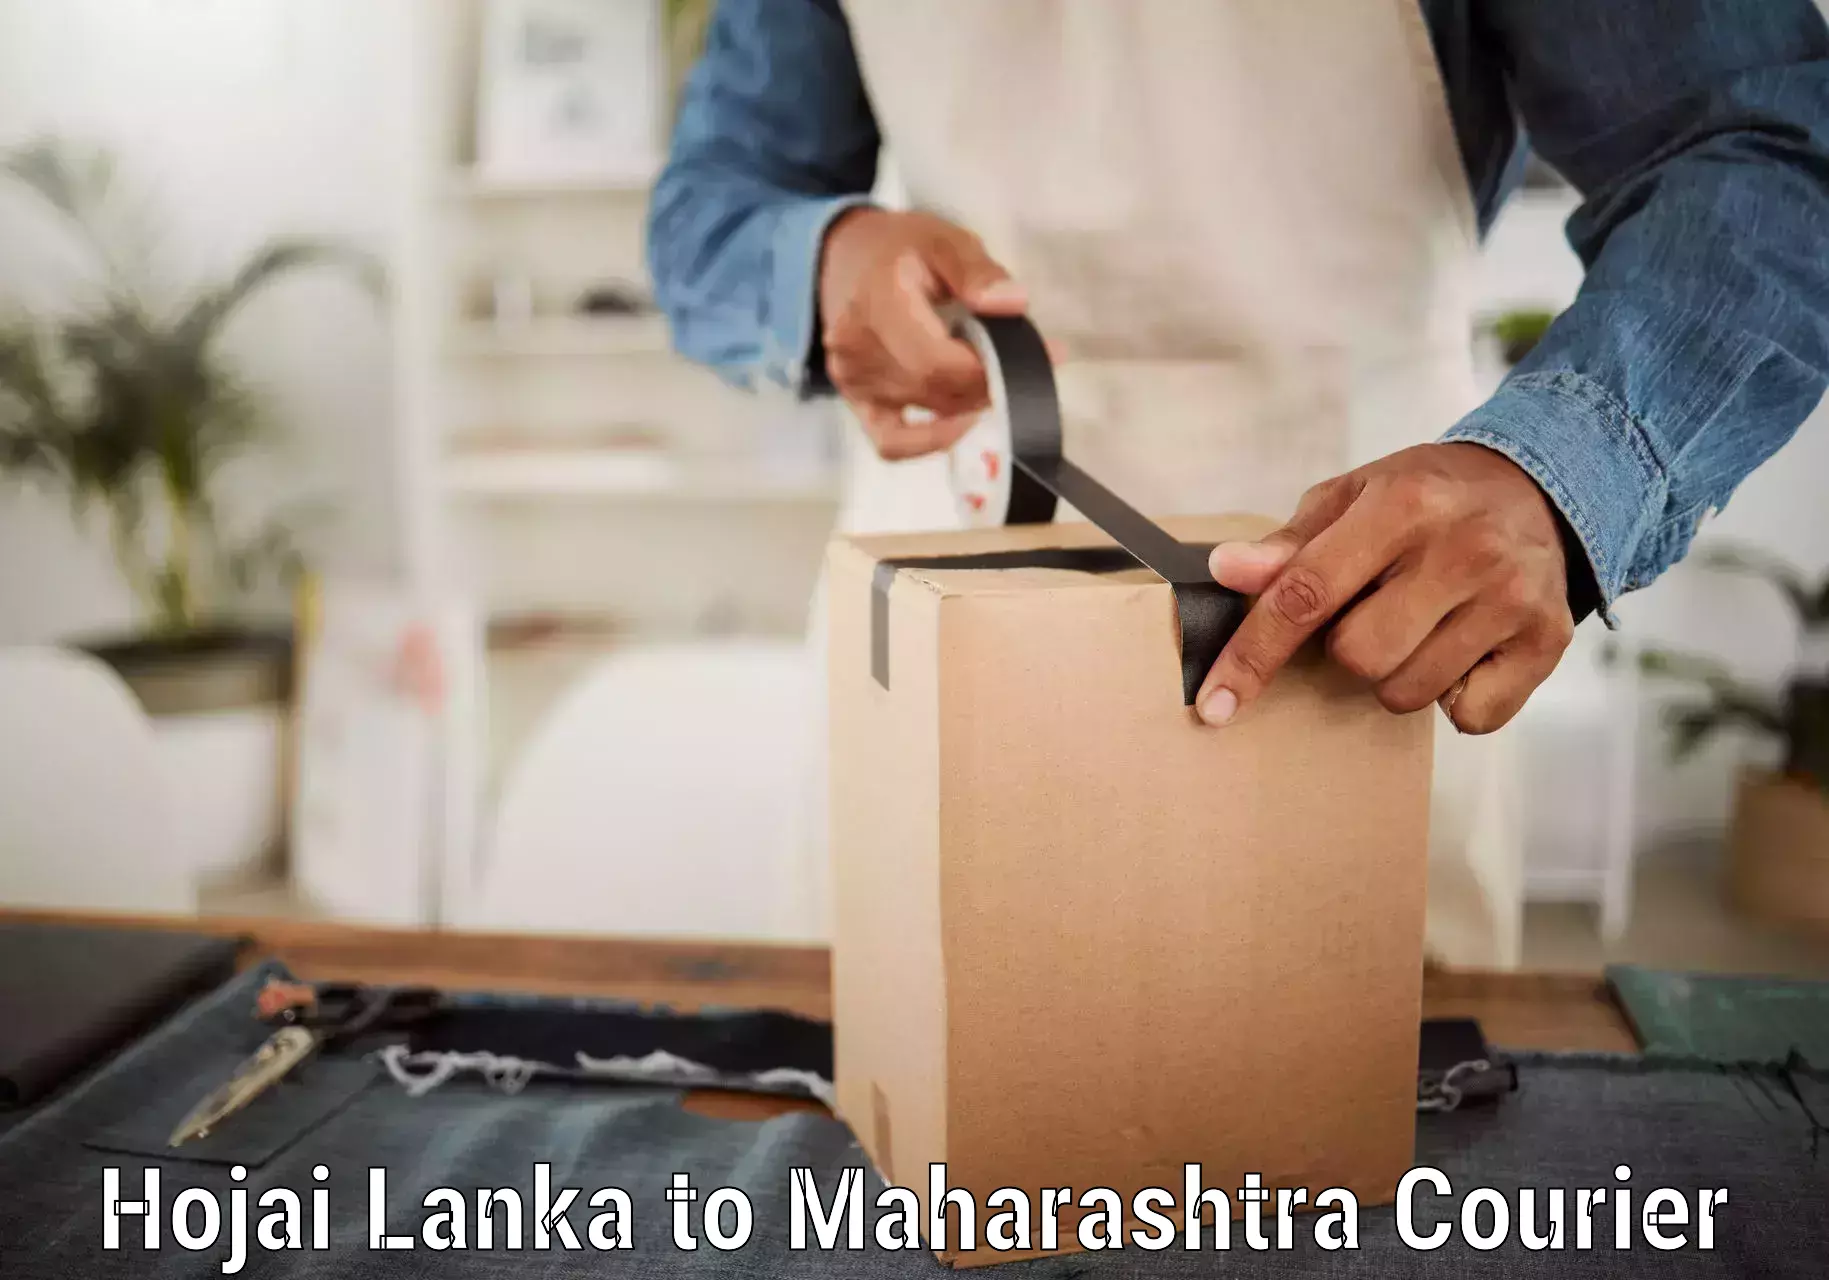 Professional courier handling Hojai Lanka to Yavatmal